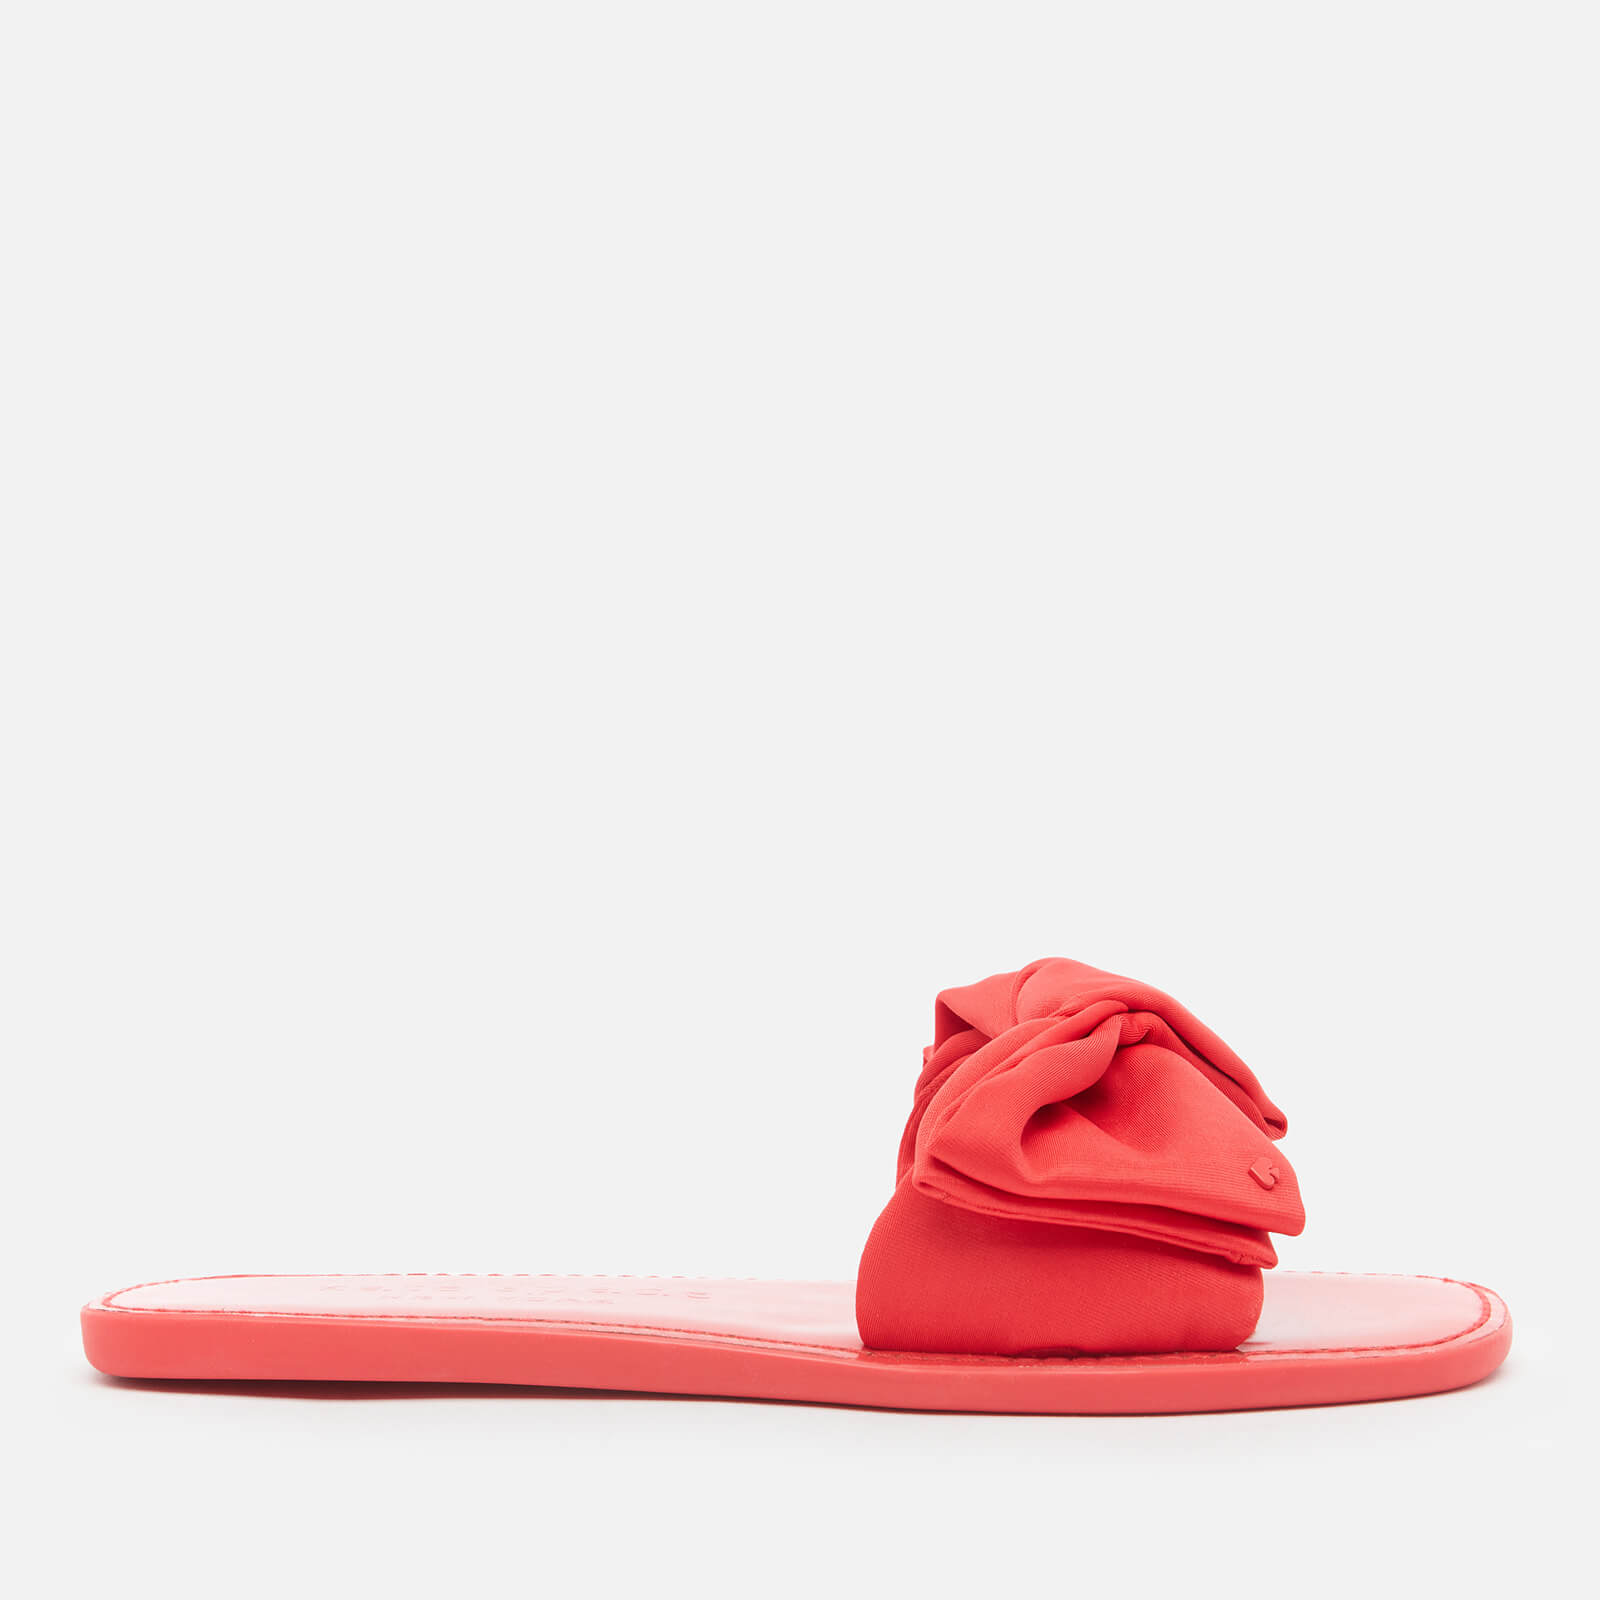 Kate Spade New York Women's Bikini Slide Sandals - Coral Rose - UK 4